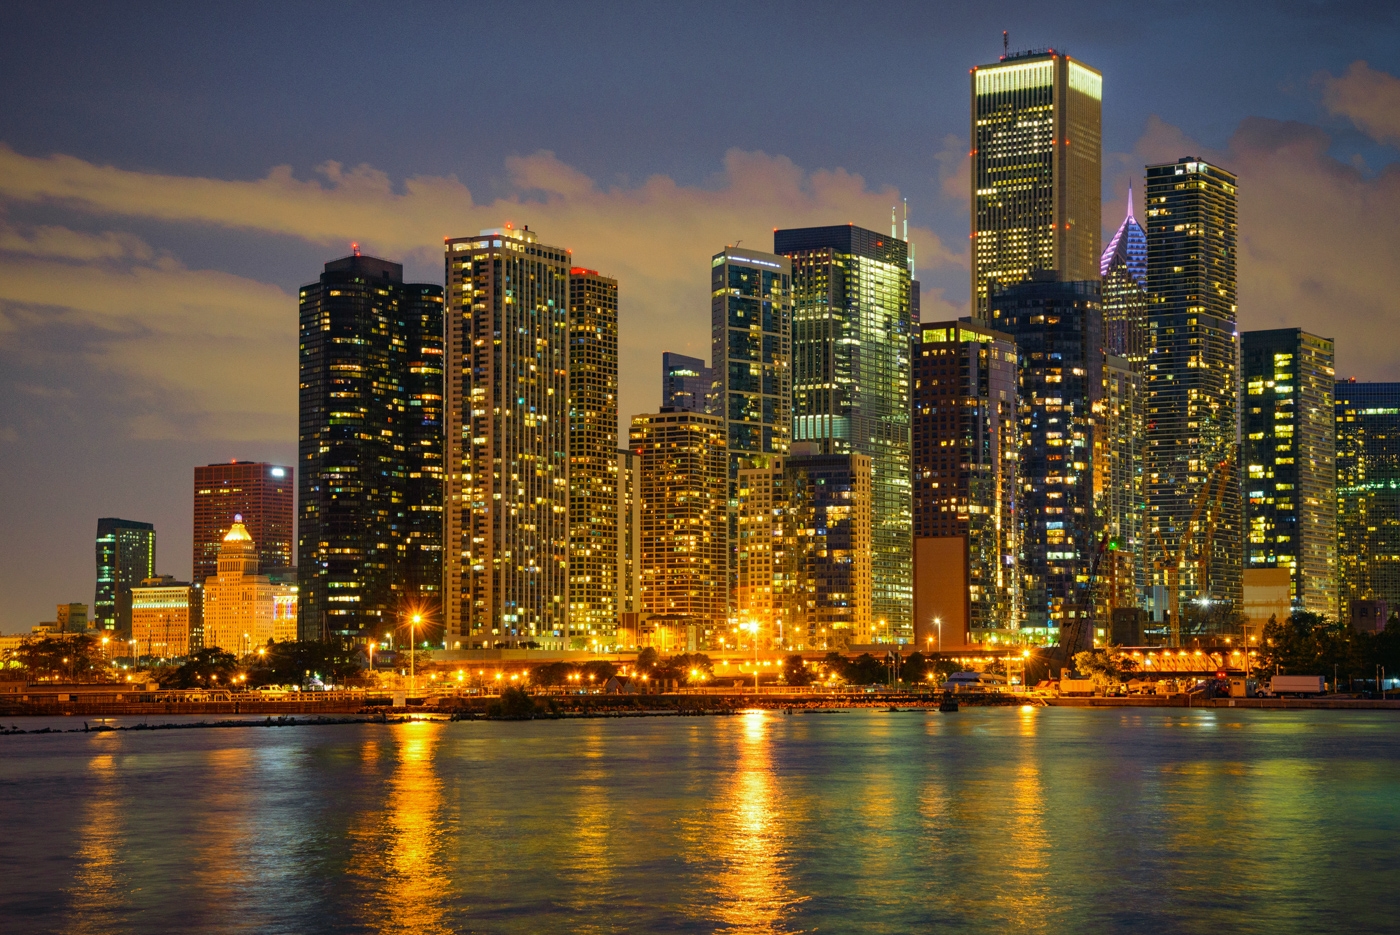 Navy Pier Night View of Chicago by Bill Payne